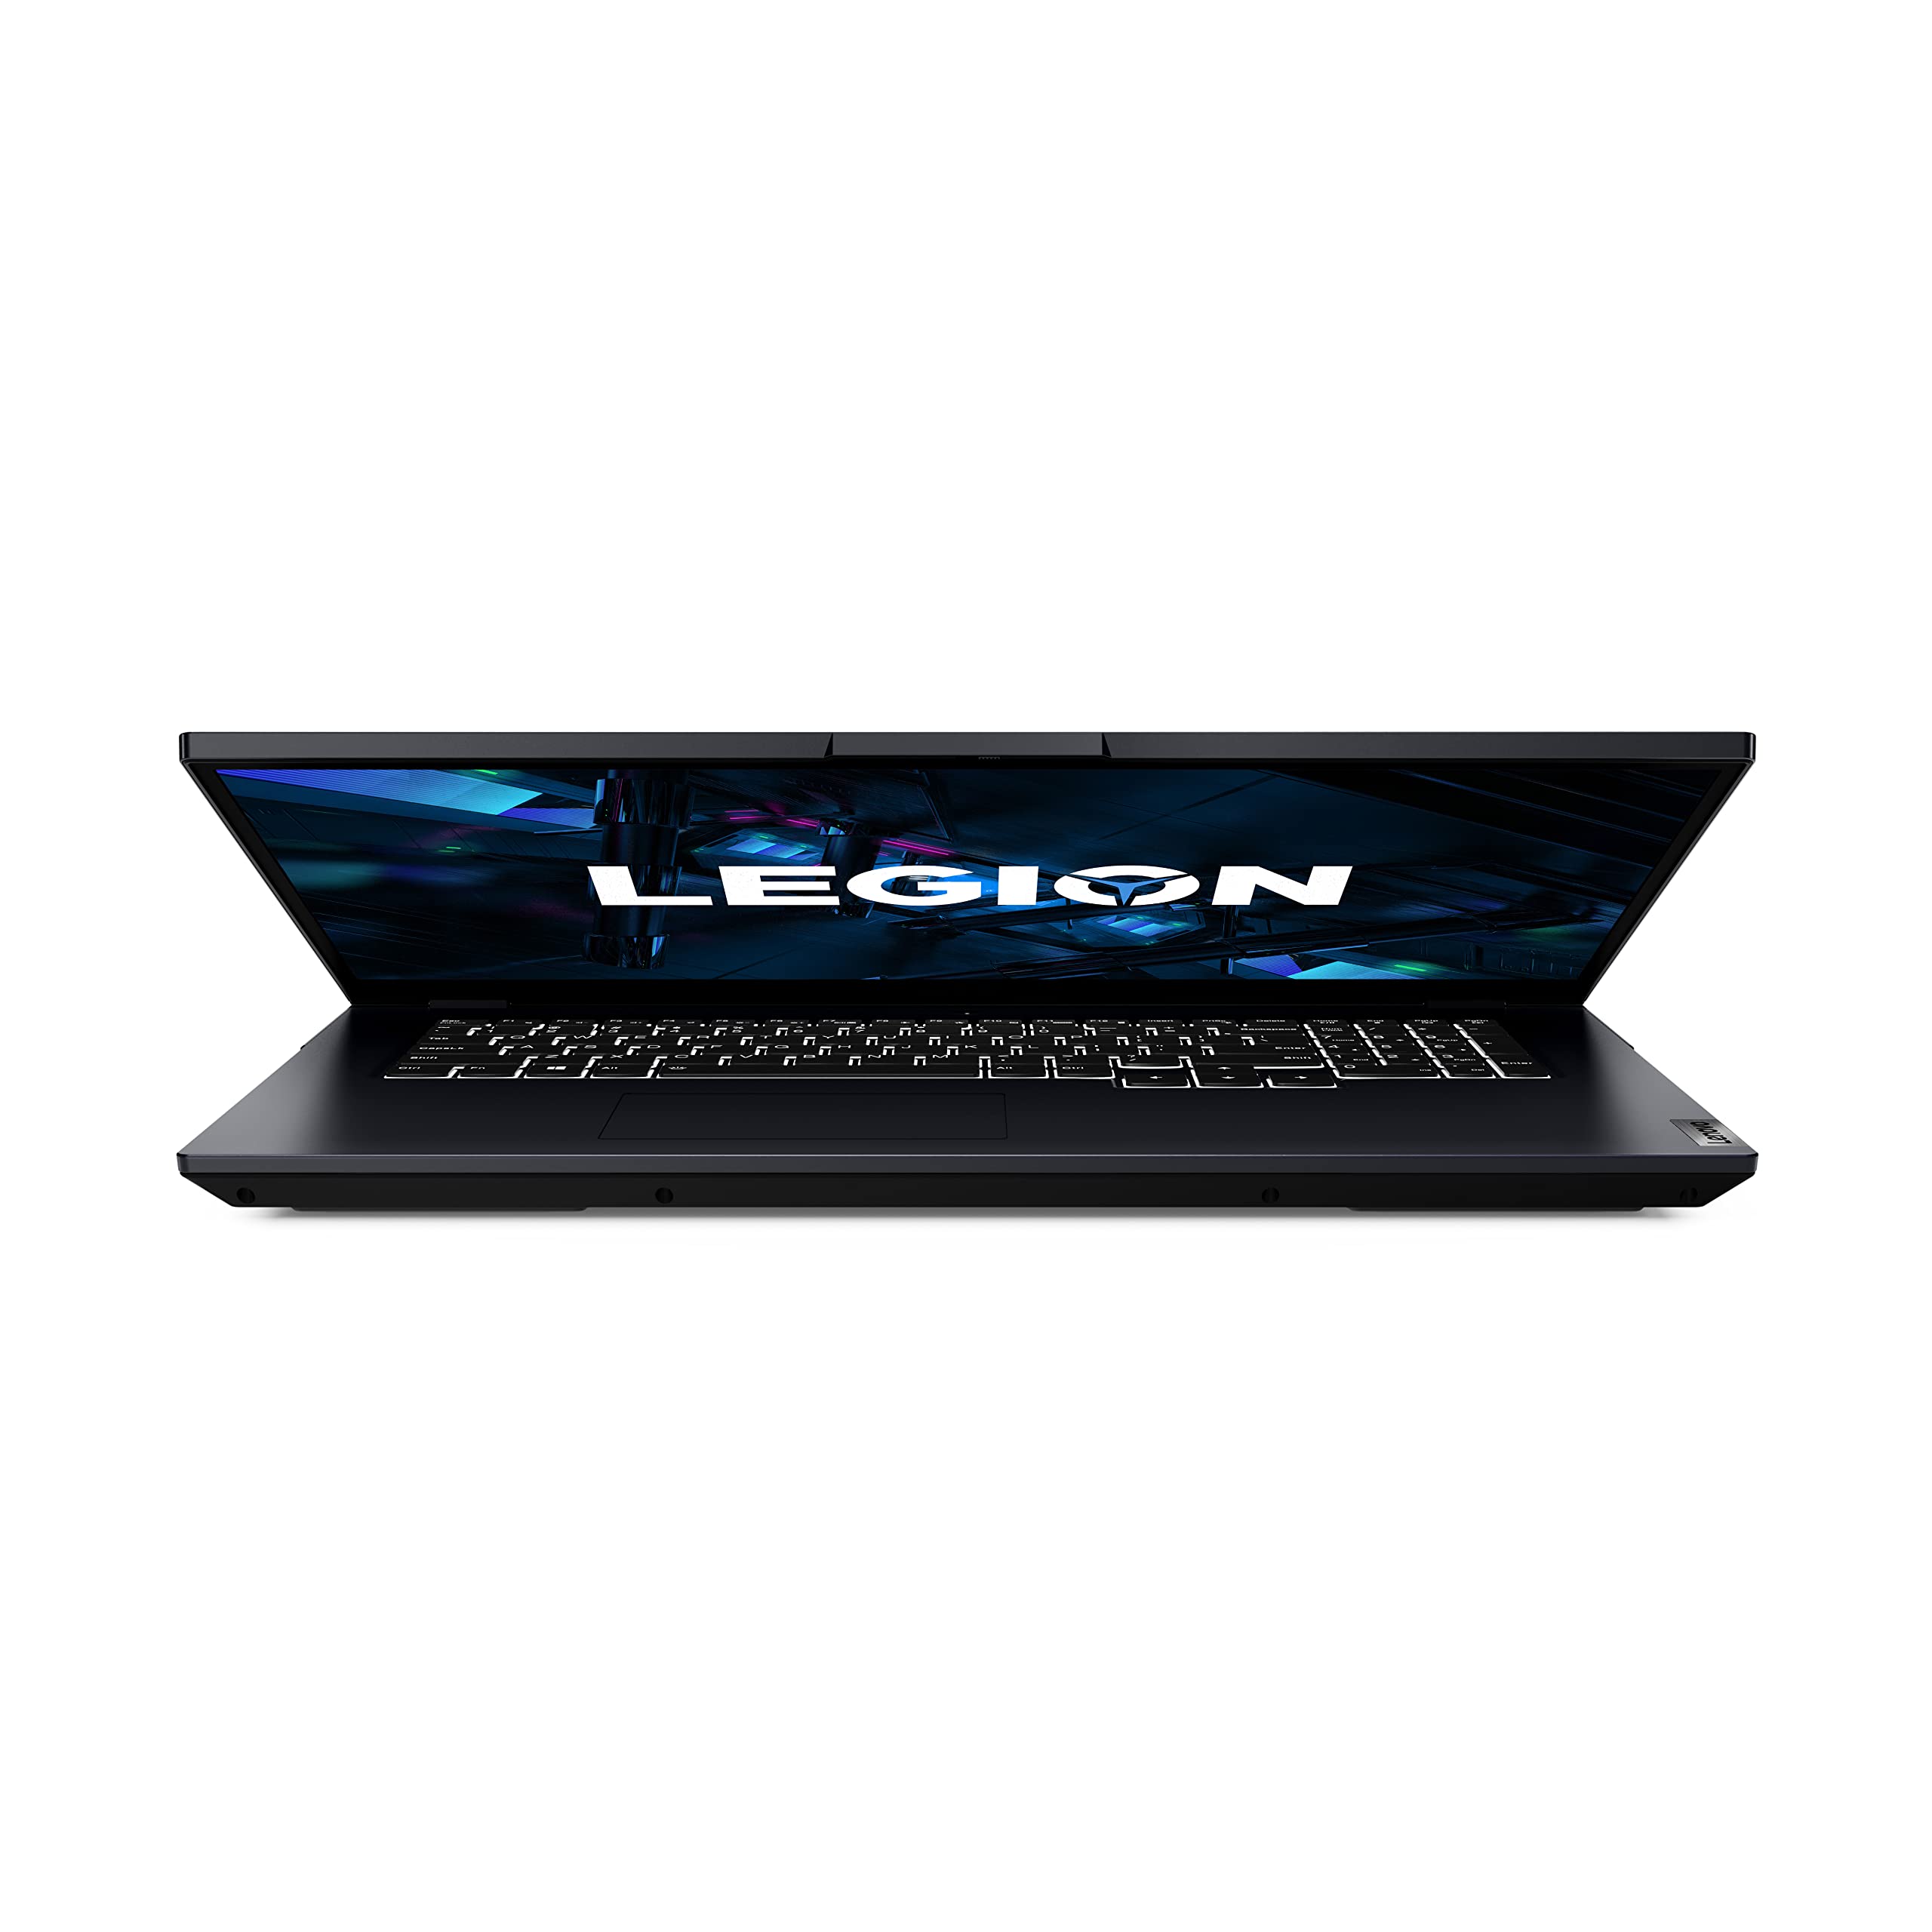 Lenovo - Legion 5i - Gaming Laptop - Intel Core i7-11800H - 8GB DDR4 RAM - 1TB NVMe TLC SSD - NVIDIA GeForce RTX 3050 Ti Graphics - 17.3